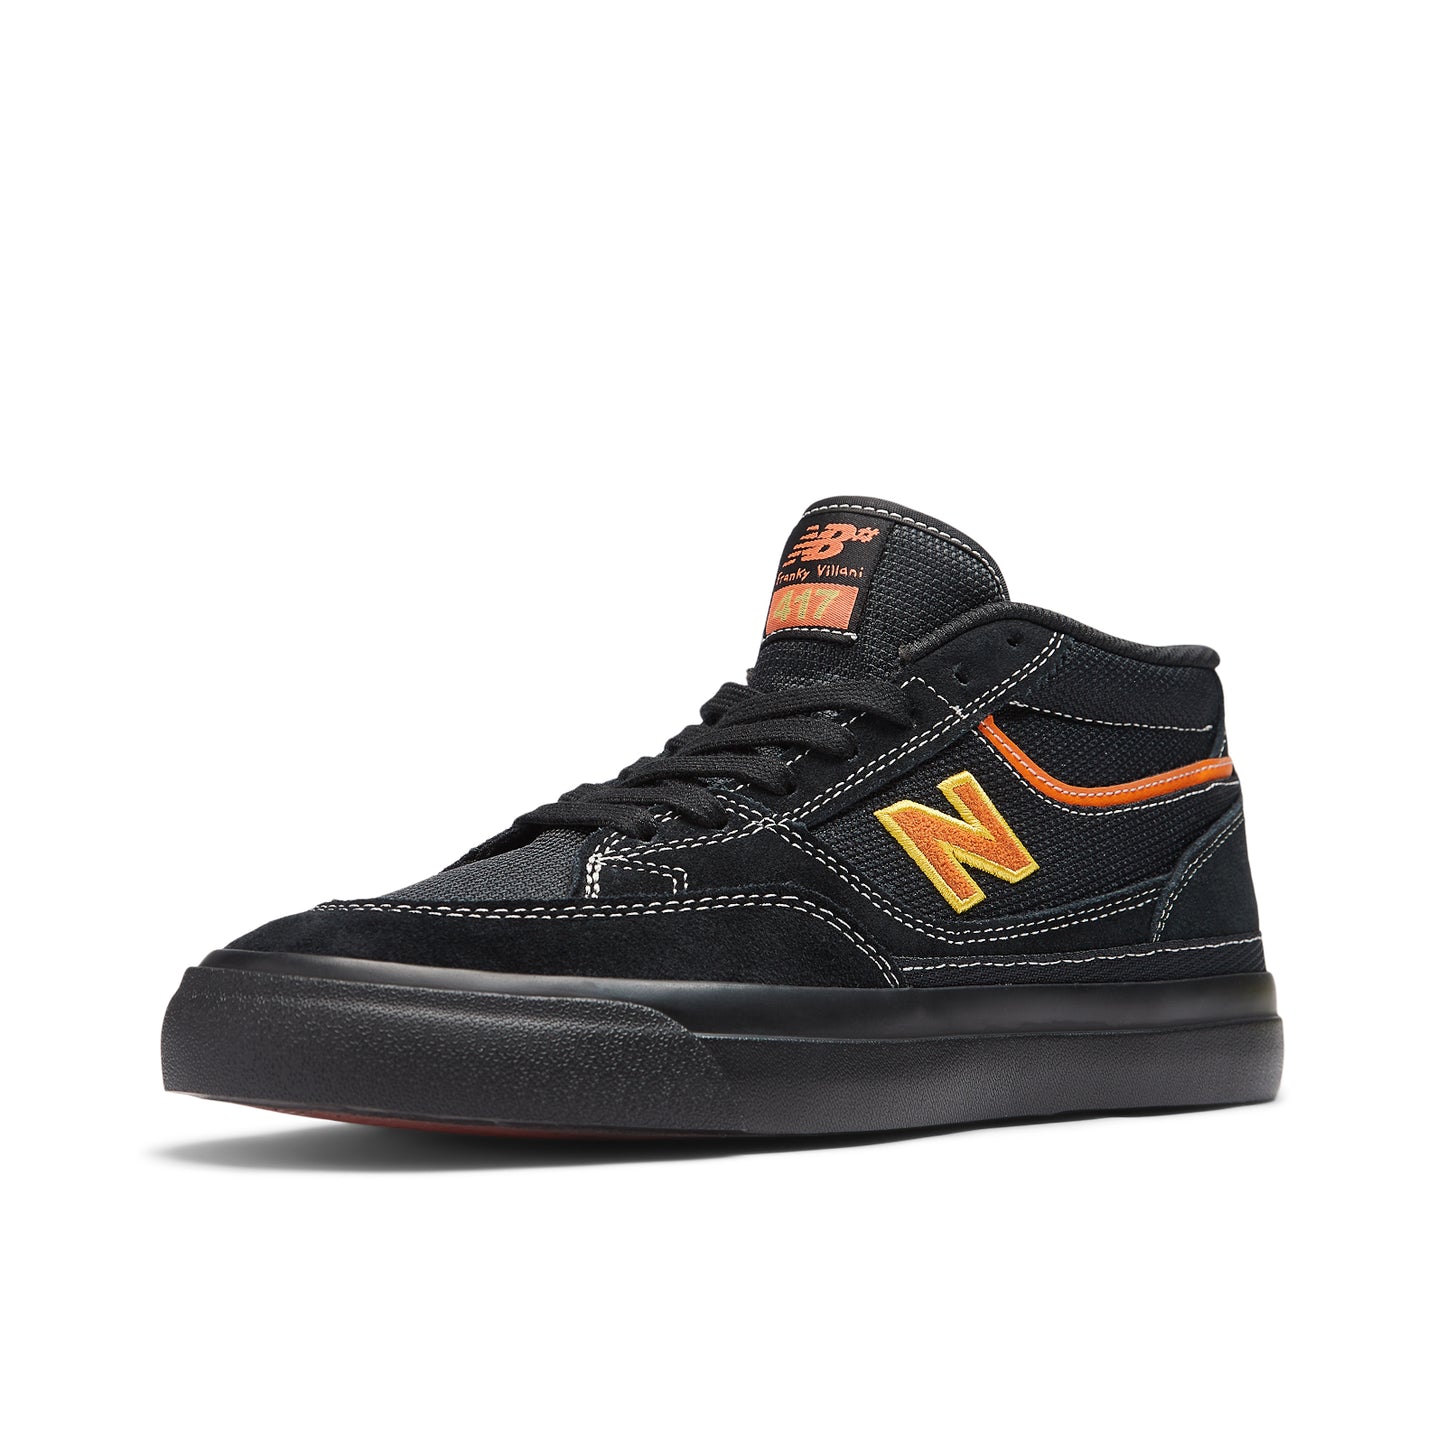 NB# 417 Villani - (Halloween) Black Orange